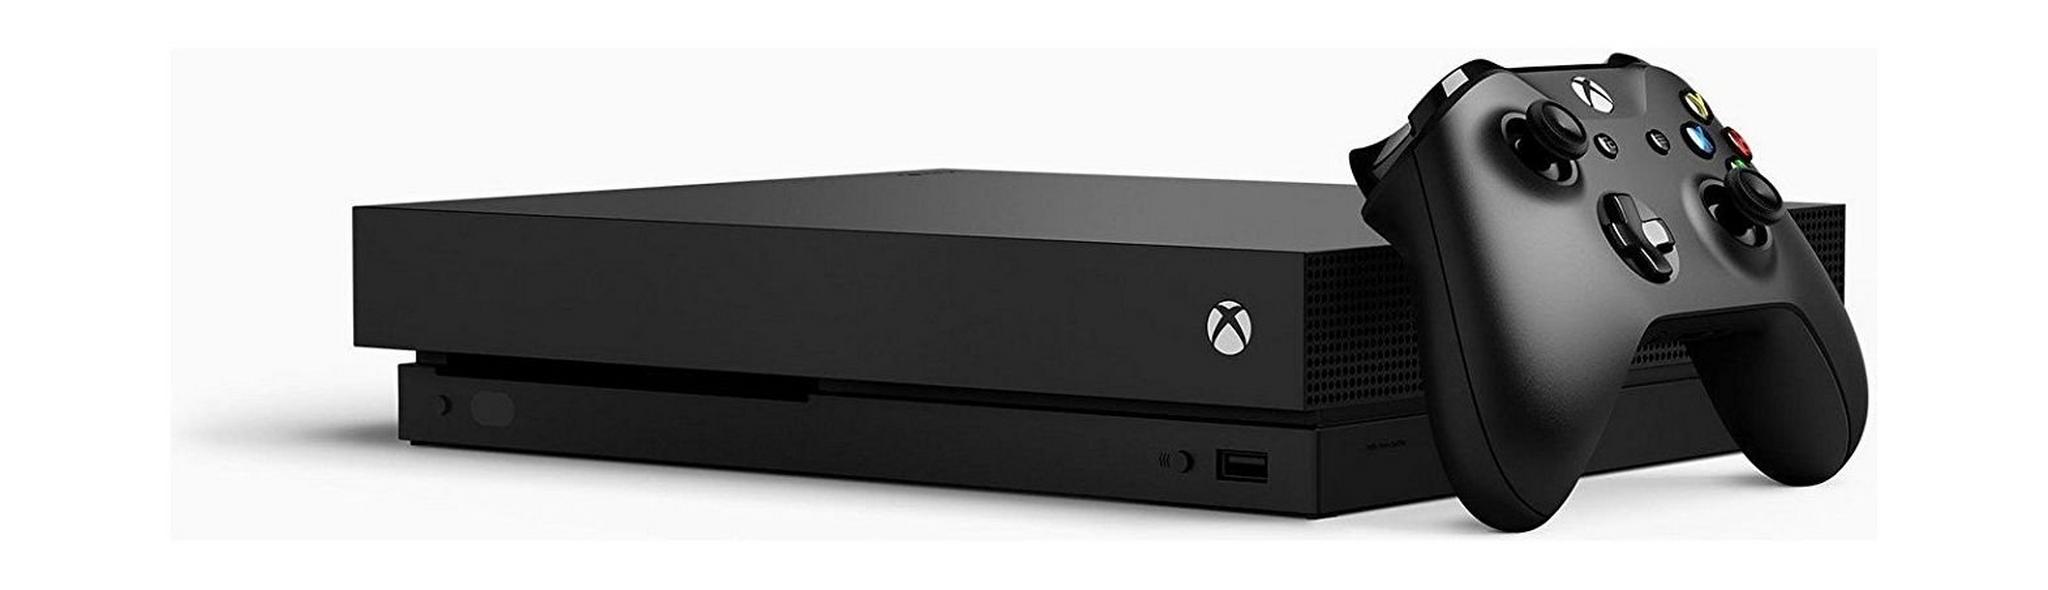 Xbox One X Standard Edition Console 1TB - Black